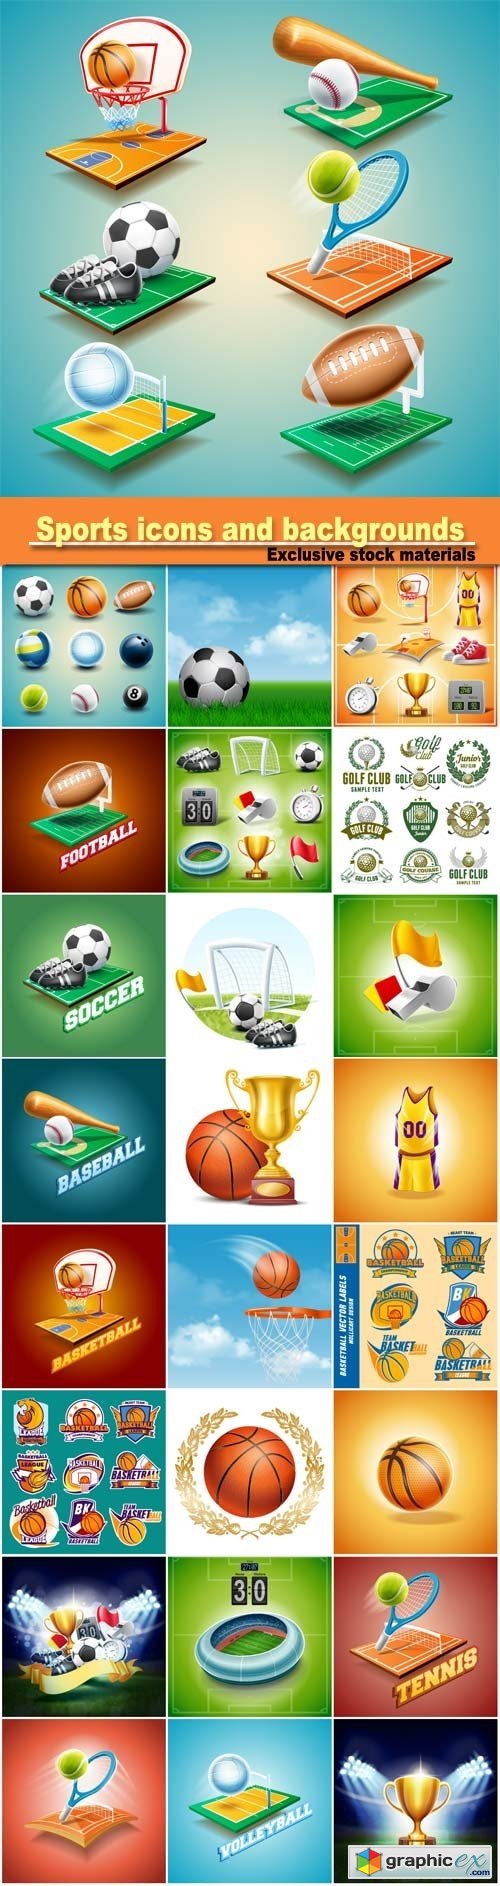 Sports icons and backgrounds vector, football, basketball, golf, baseball